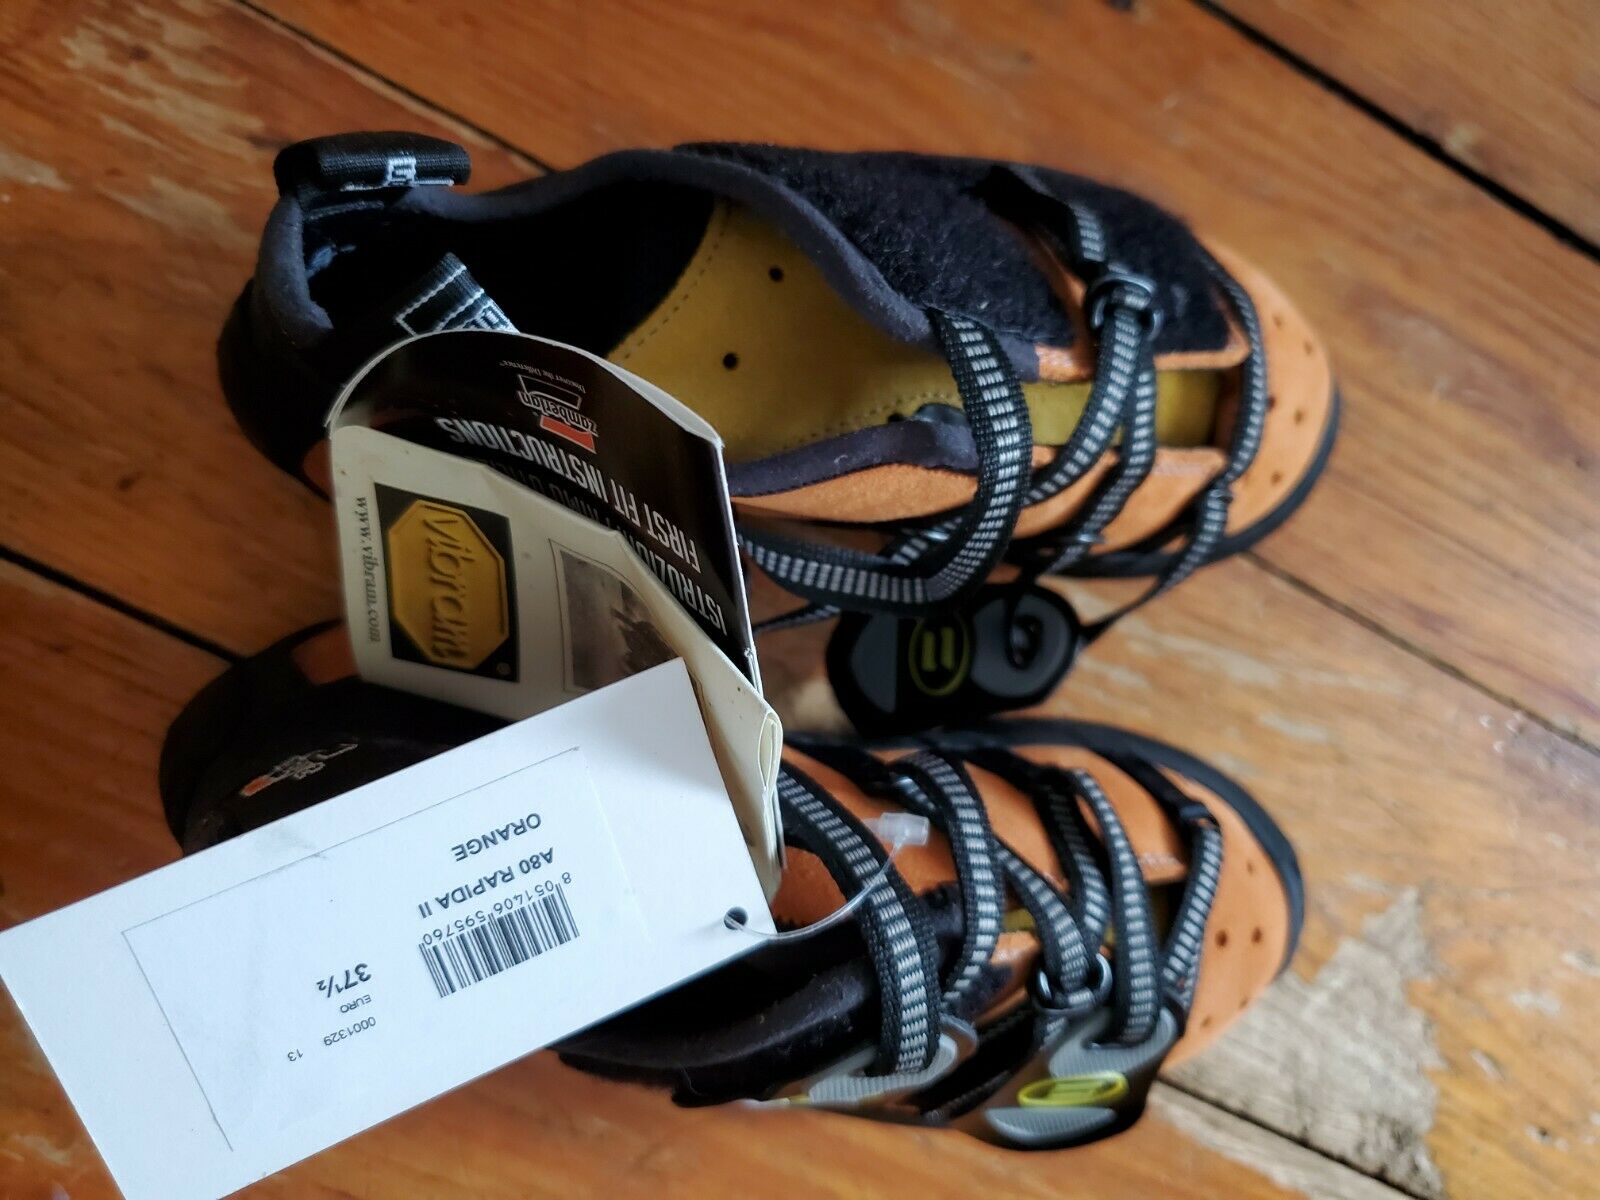 Zamberlan Rapida A80 orange climbing shoes size 37.5 new in box, vibram outsole